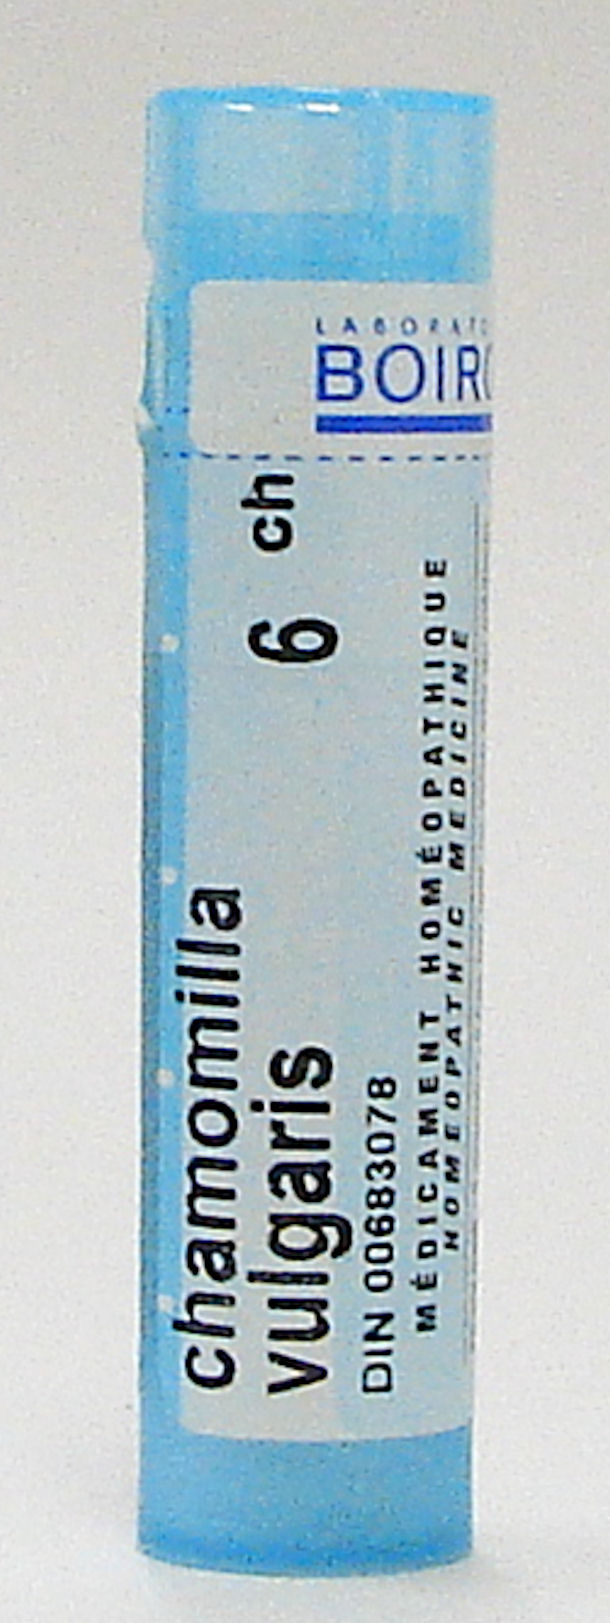 chamomilla vulgaris 6ch sublingual pellets (boiron)